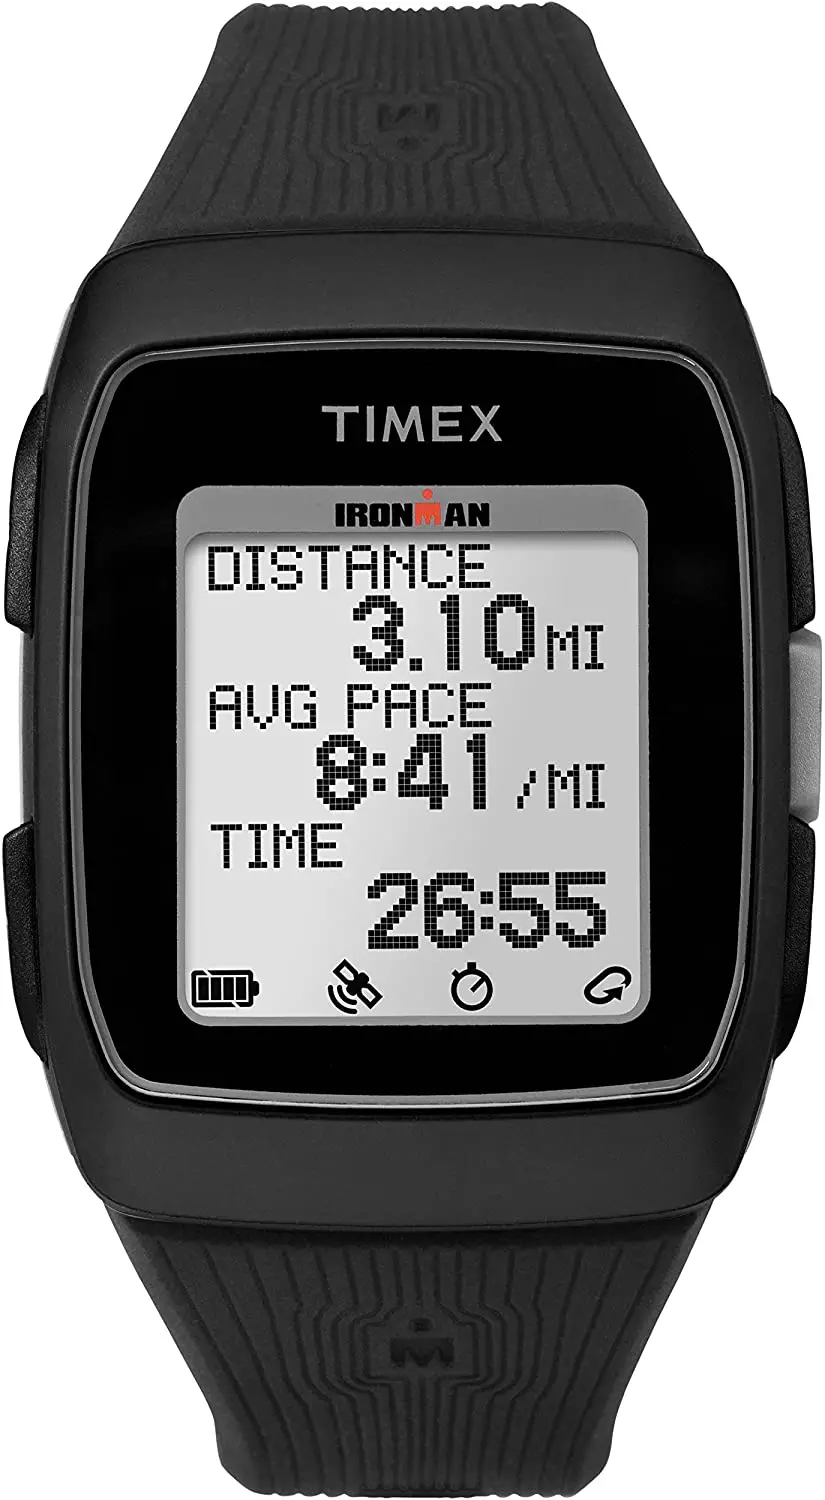 Timex Ironman GPS Running Watch